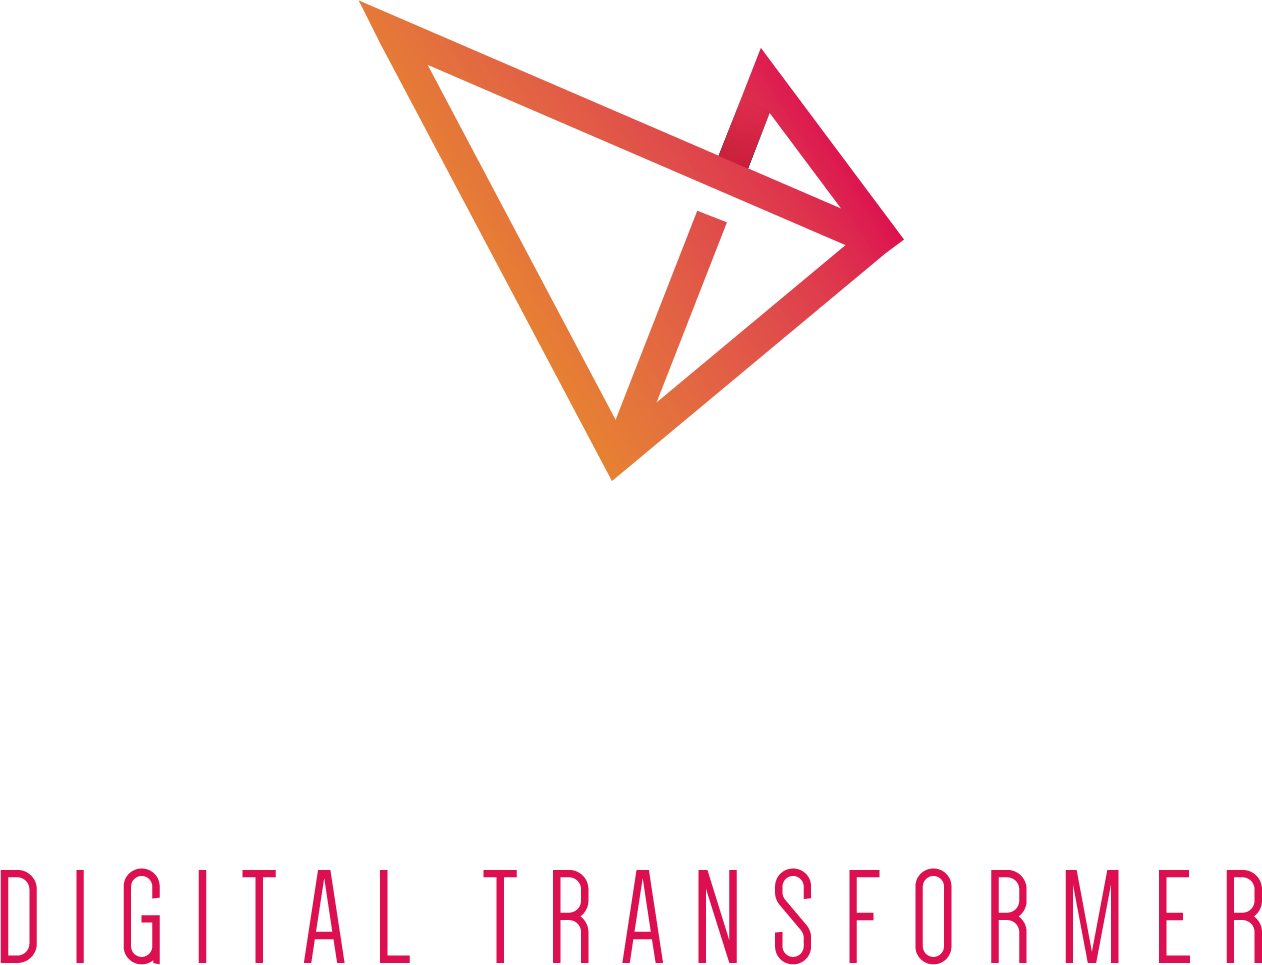 Logo Adimeo